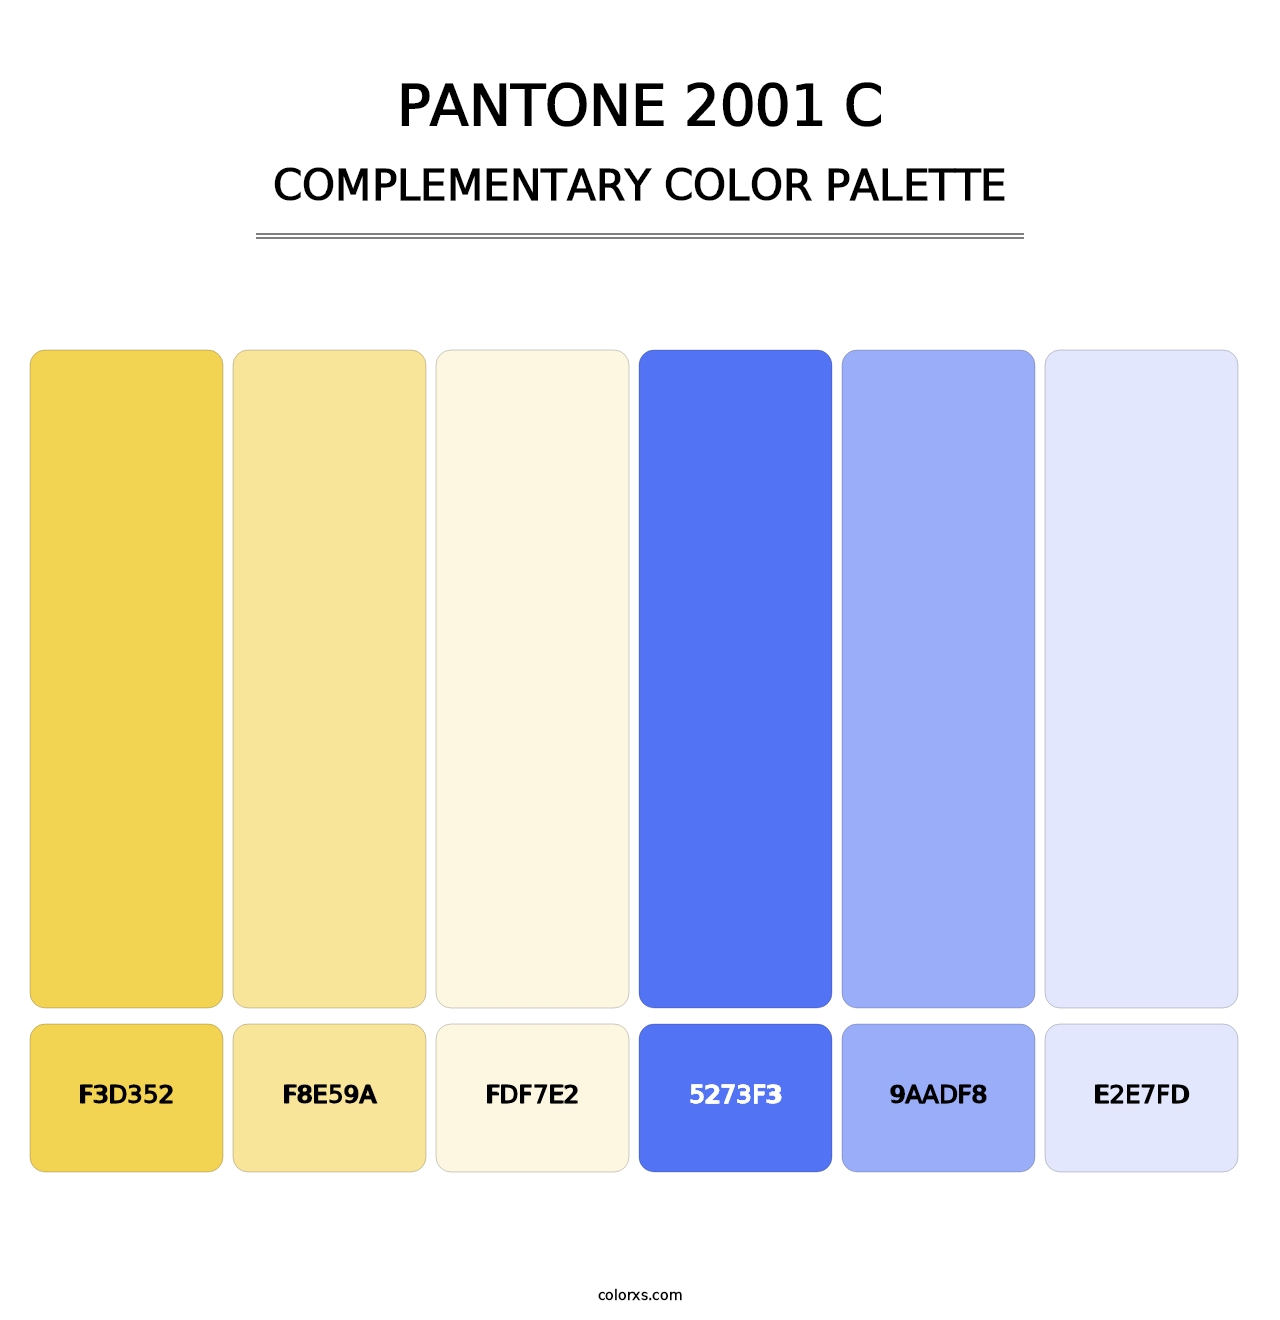 PANTONE 2001 C - Complementary Color Palette